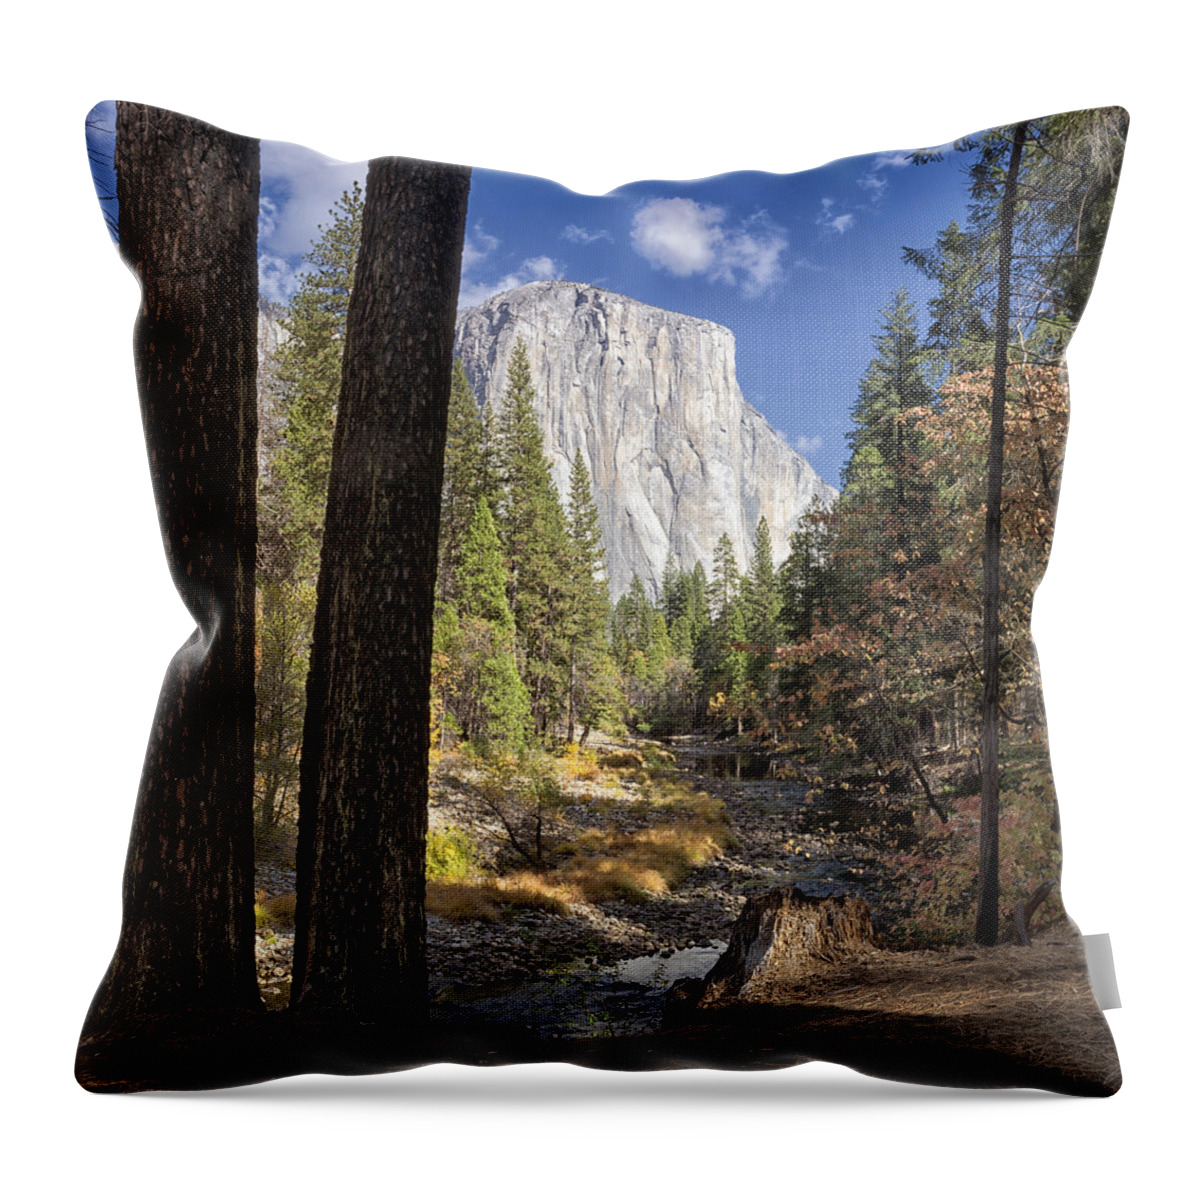 California Throw Pillow featuring the photograph El Capitan by Robert Fawcett